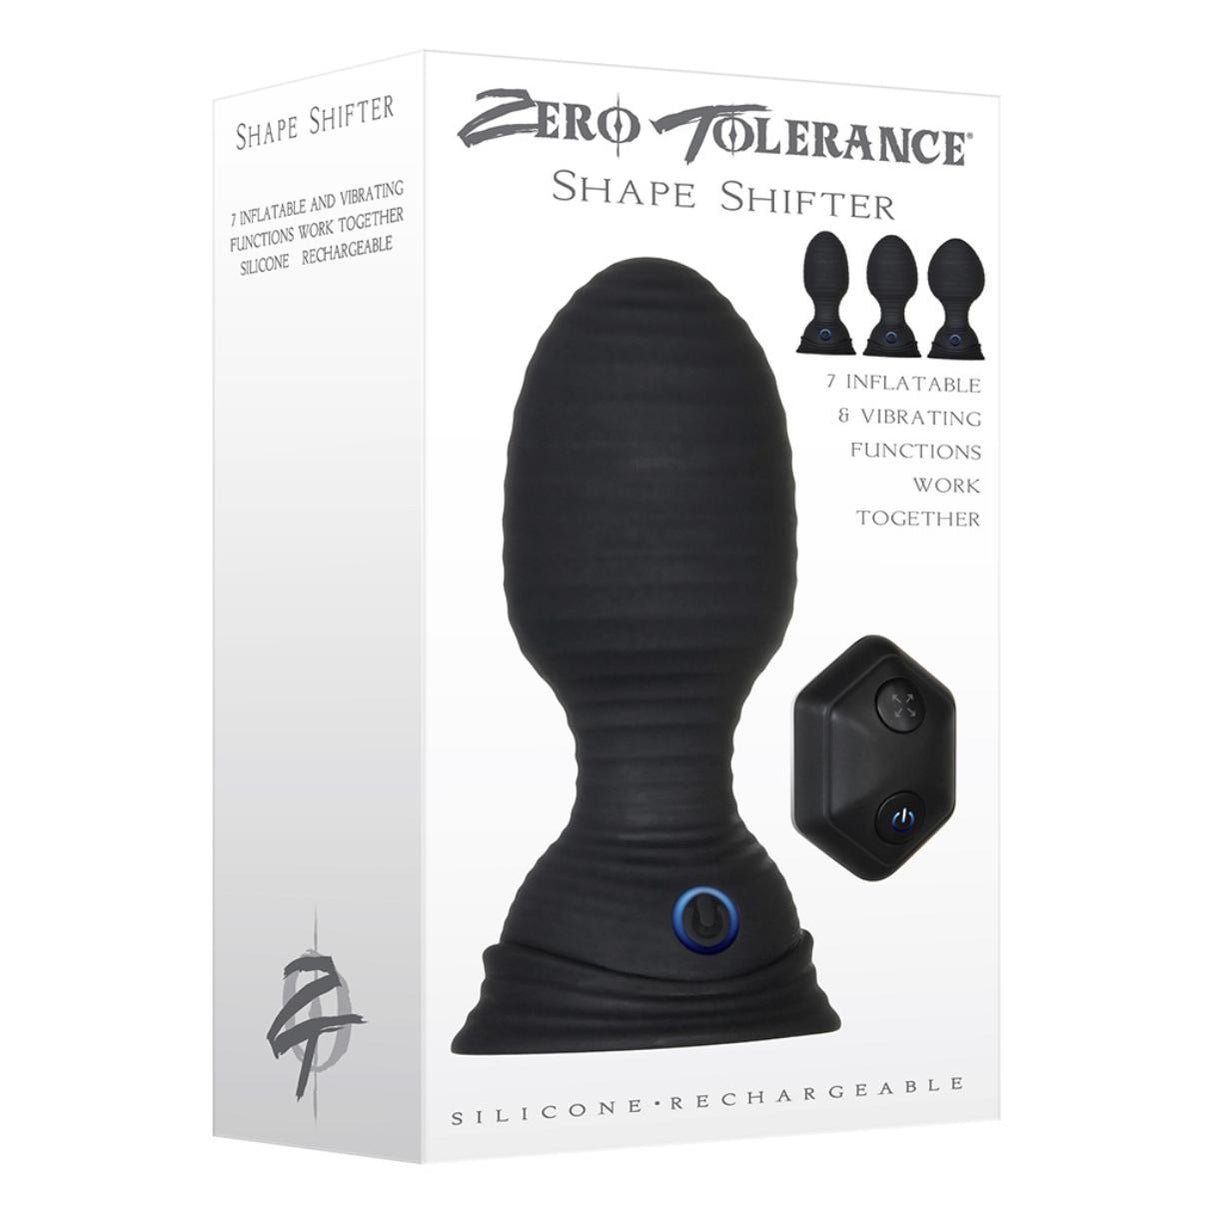 Zero Tolerance Shape Shifter Inflatable Vibrating Butt Plug